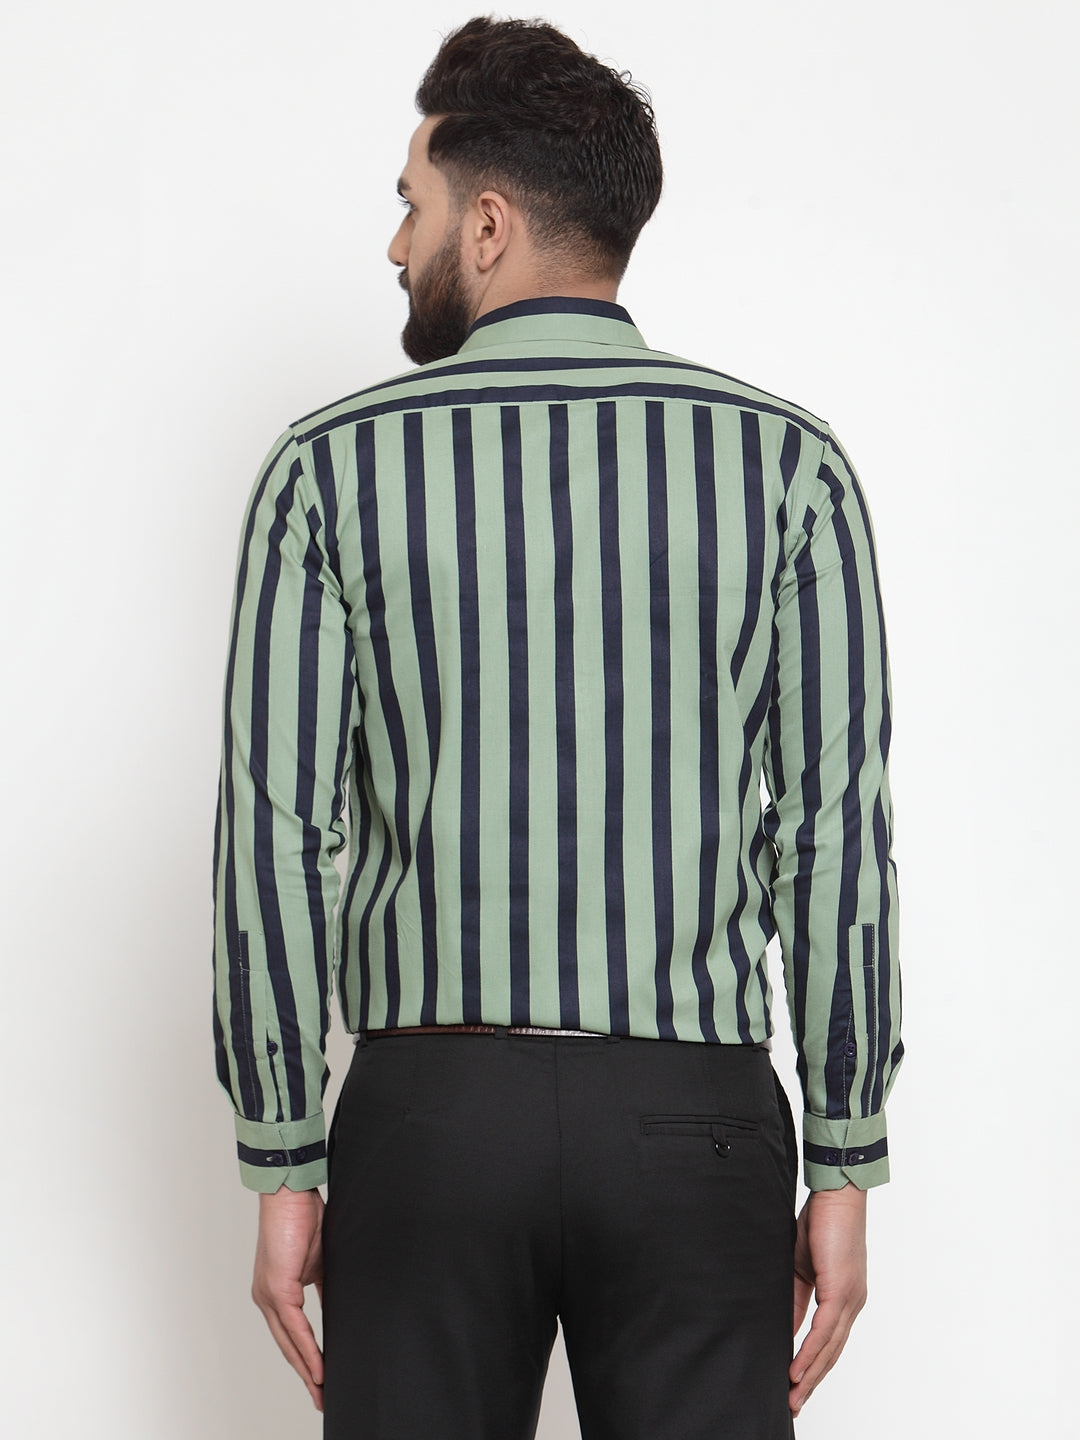 Men's Green Cotton Striped Formal Shirts ( SF 744Green ) - Jainish